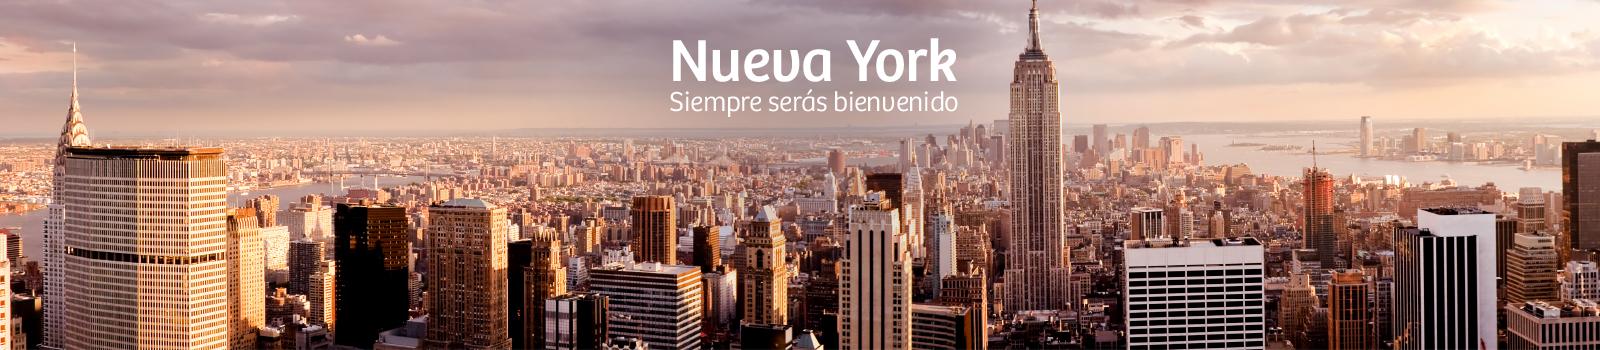 desinfectante Cortés Mal humor Viajes a Nueva York. Ofertas 2022 | Viajes Carrefour